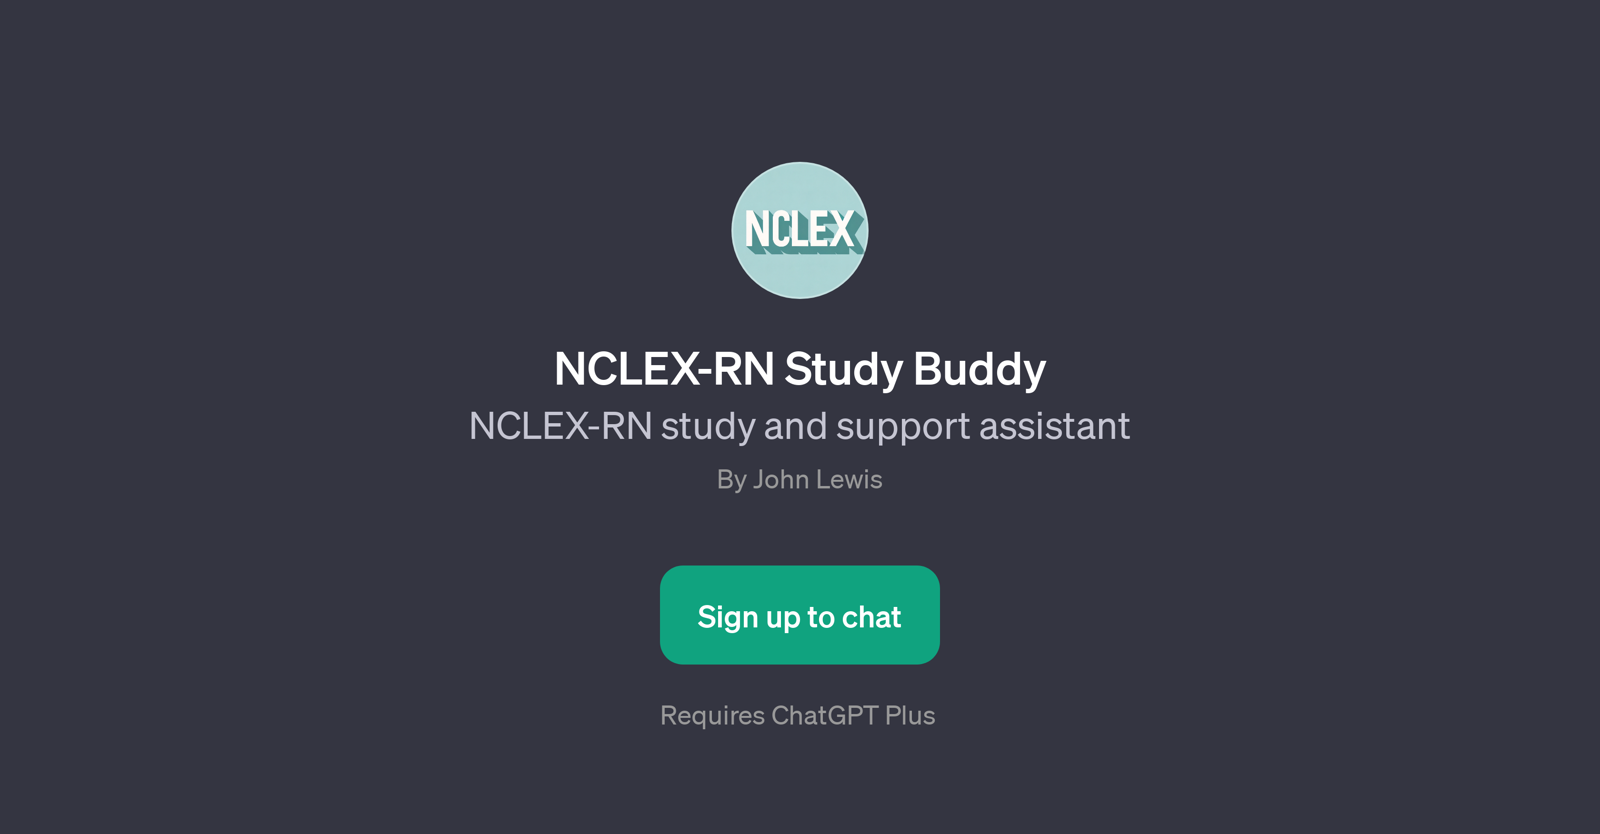 NCLEX-RN Study Buddy website